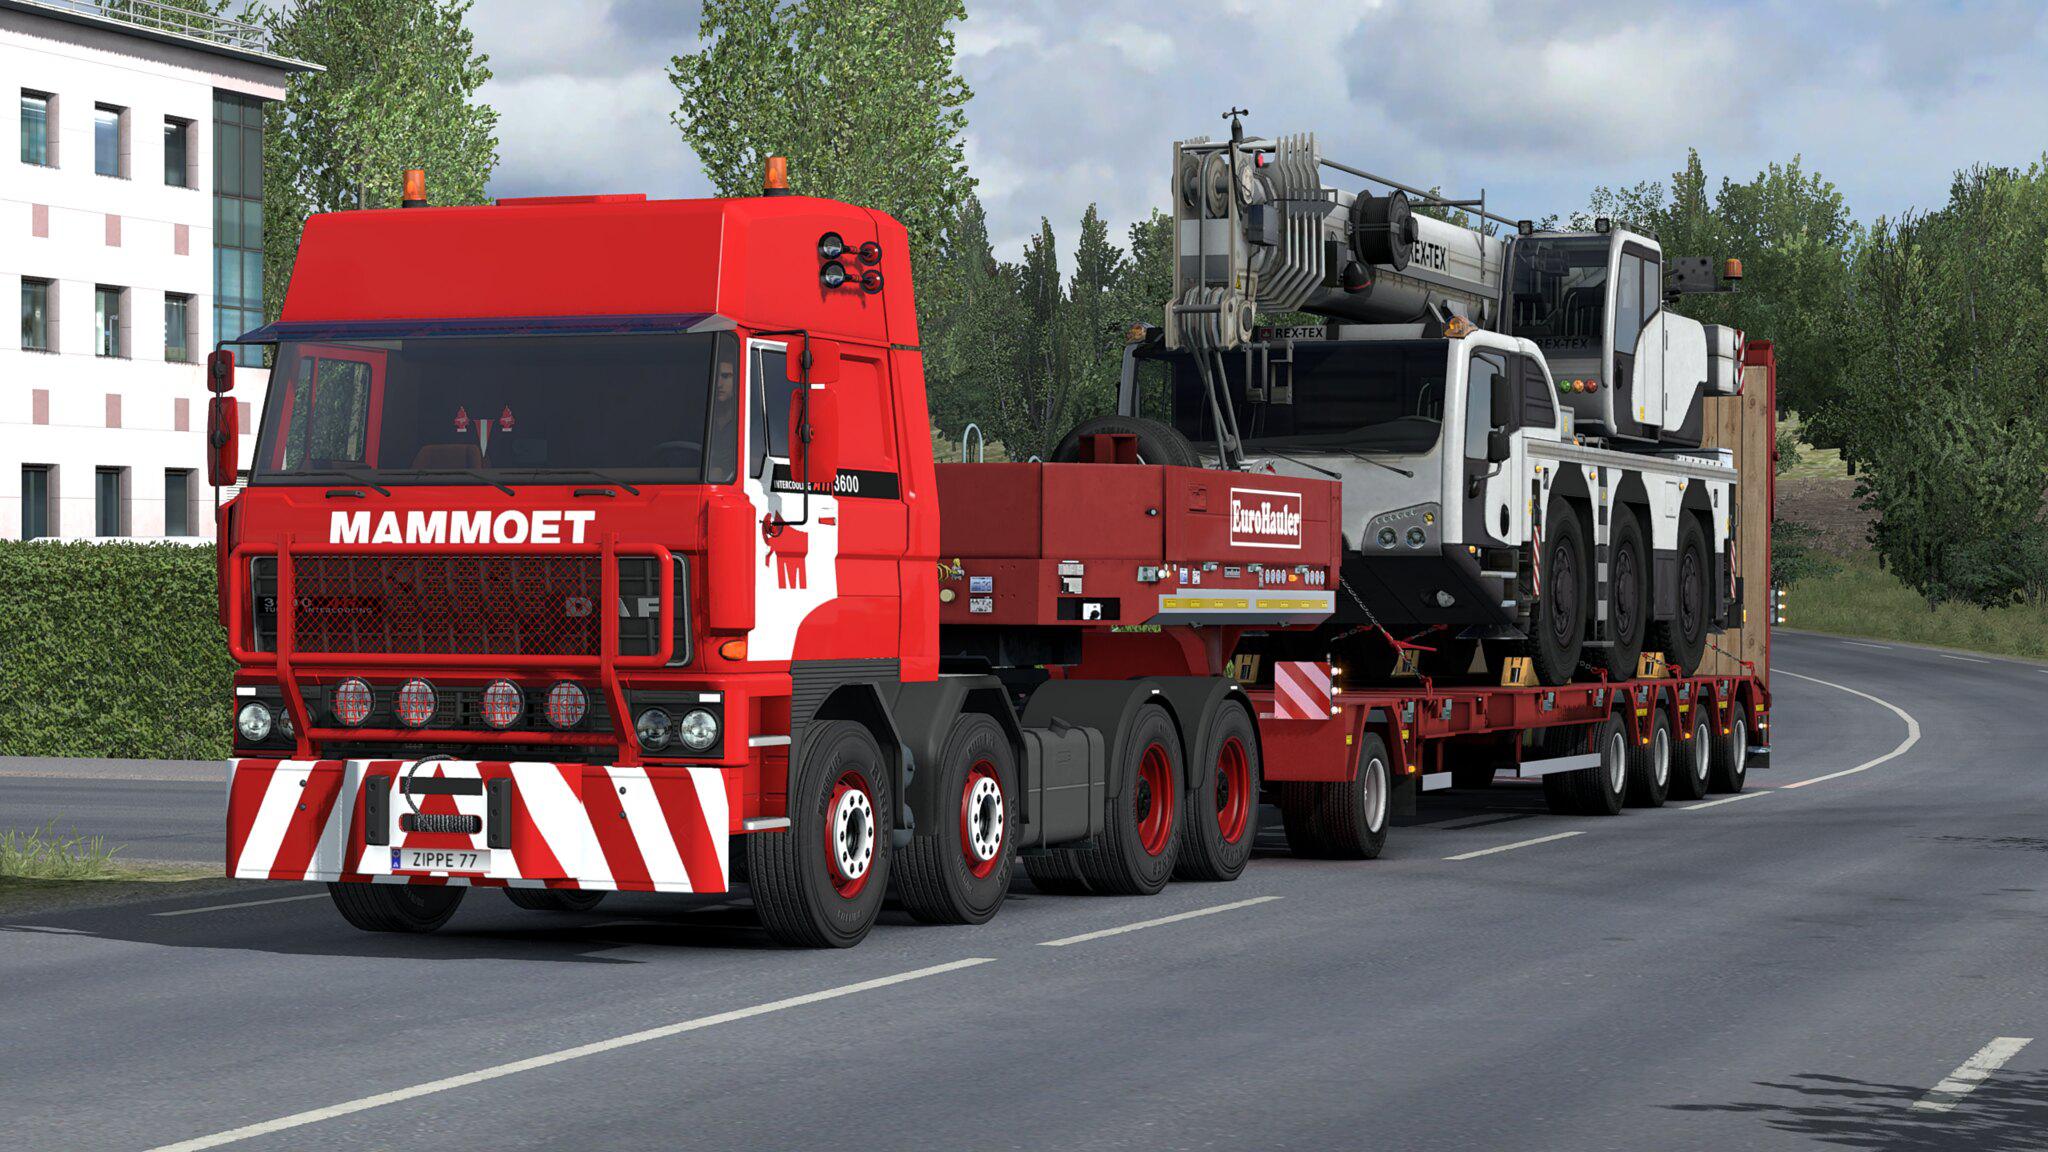 Daf F241 Series By Xbs V14 Ets 2 Mods Ets2 Map Euro Truck Simulator 2 Mods Download 6704